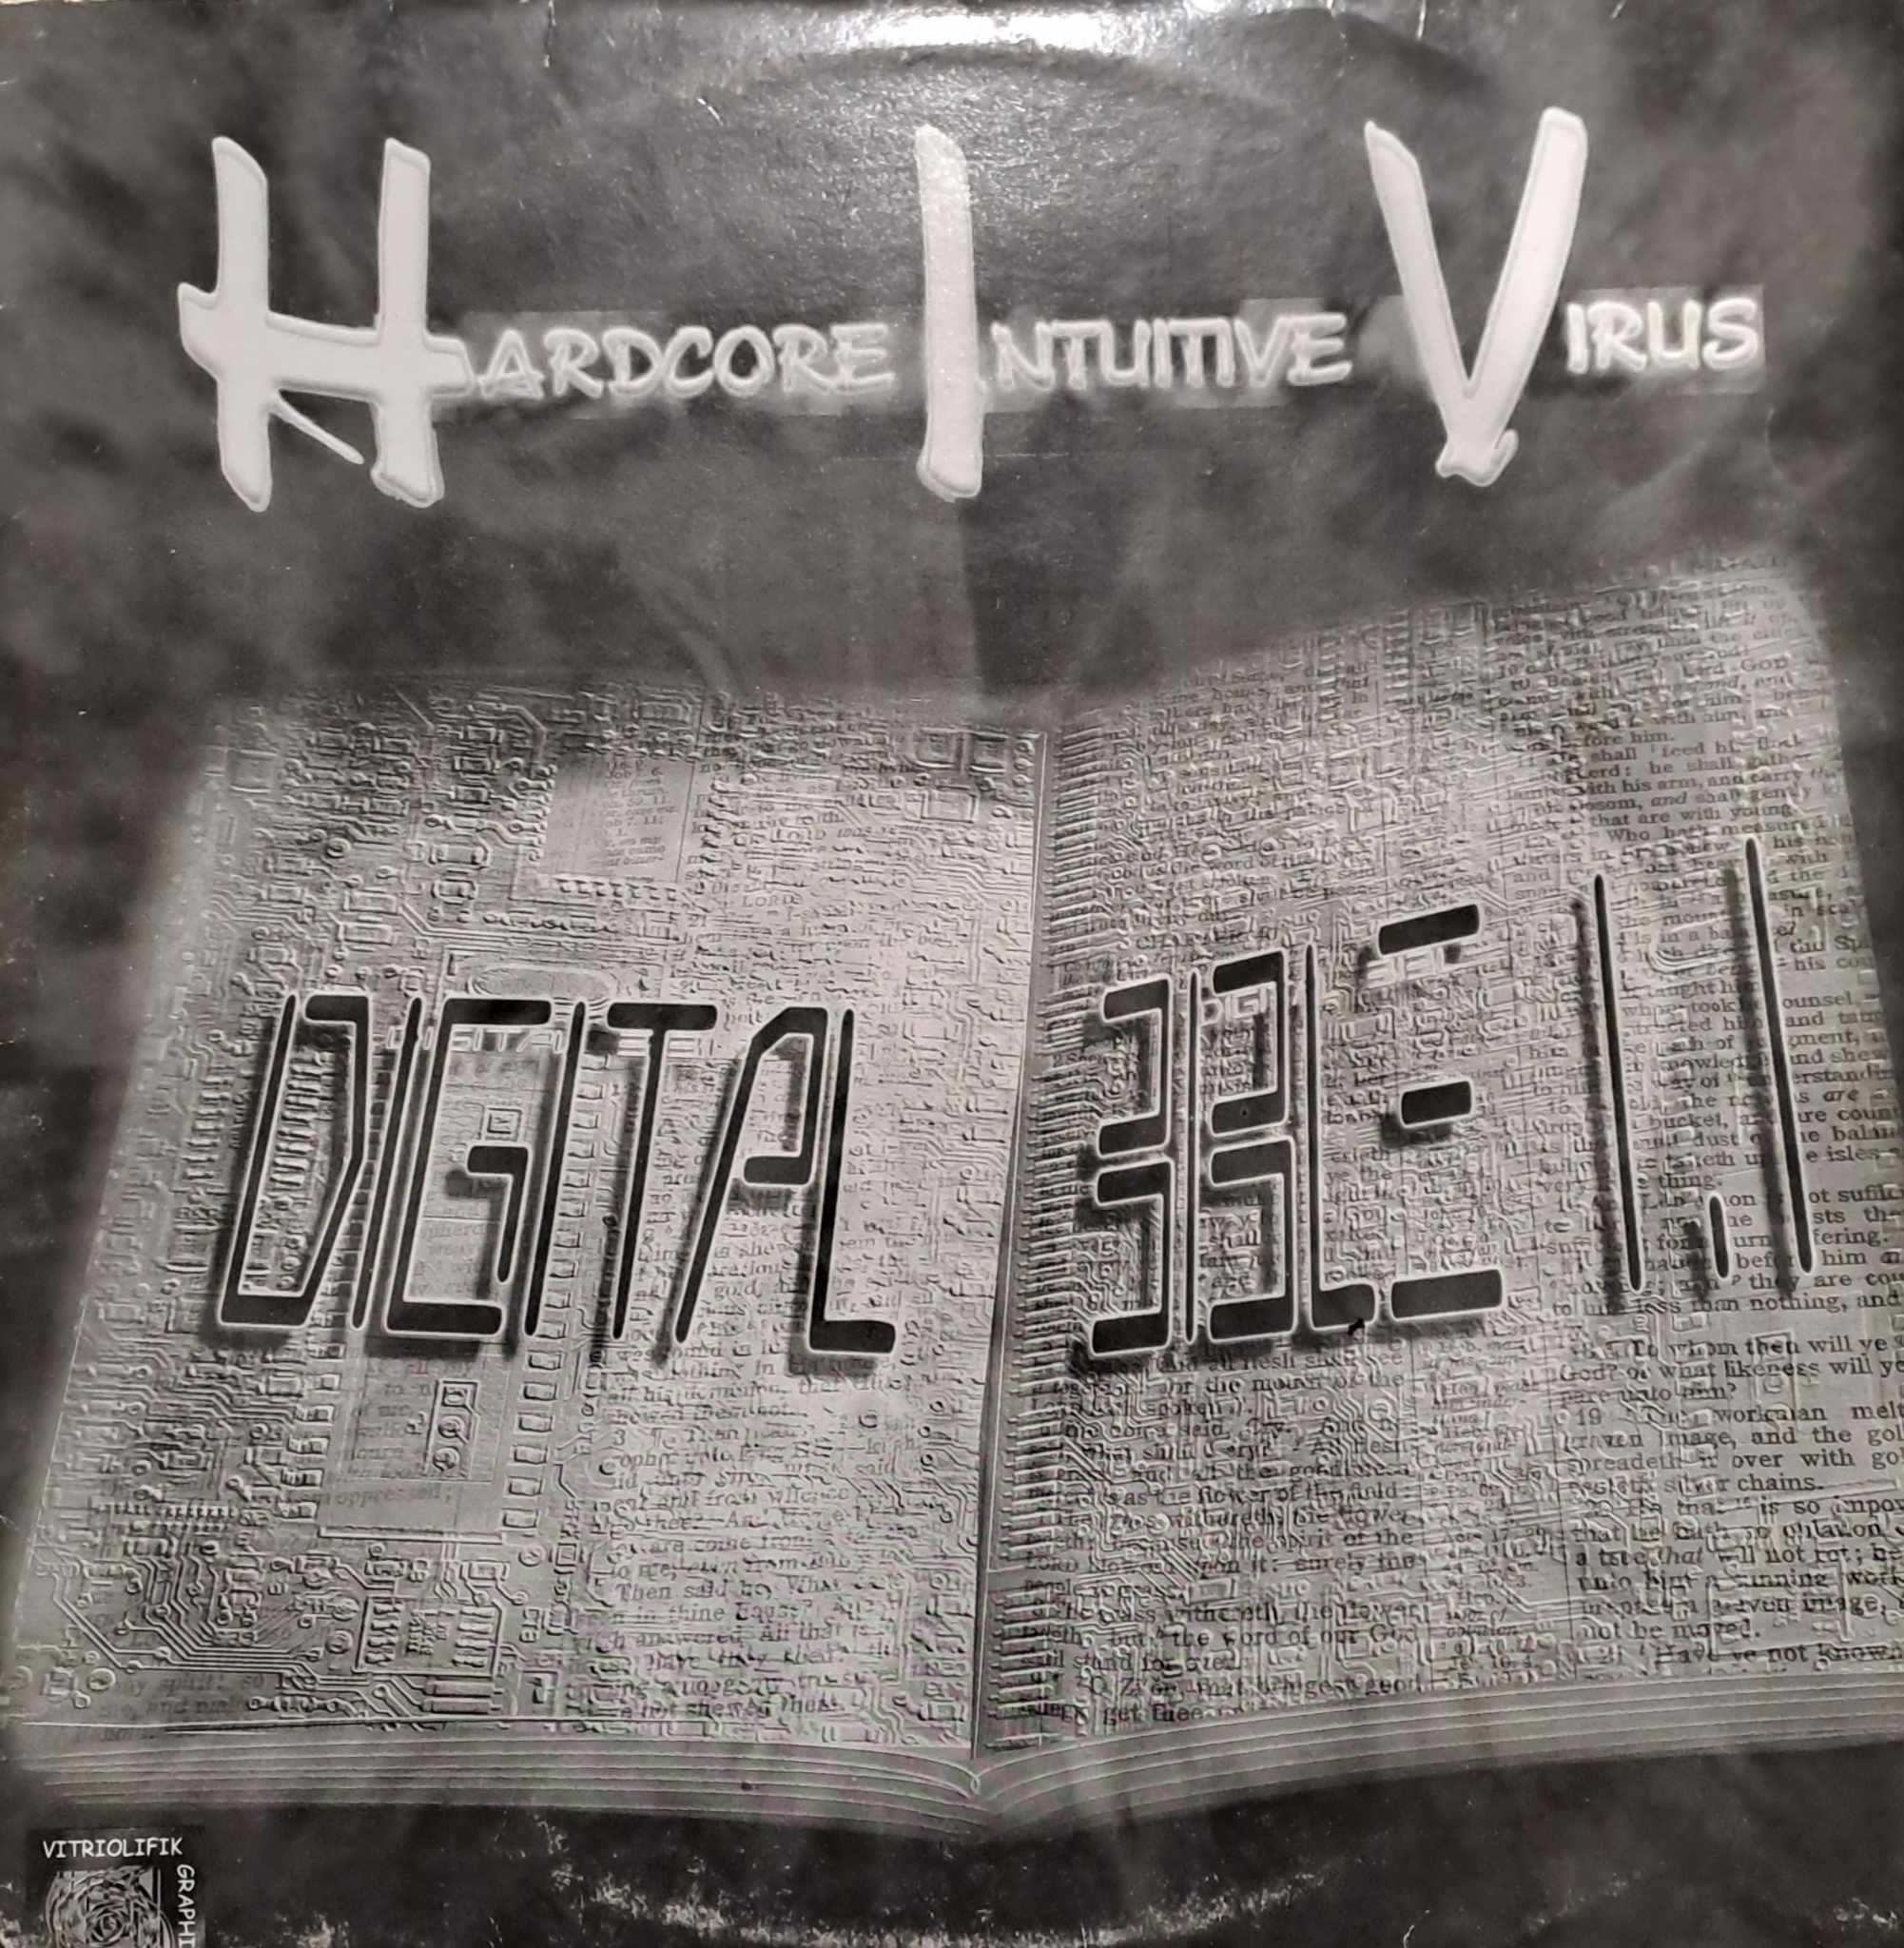 Hardcore Intuitive Virus 05 LP (double album) - vinyle hardcore